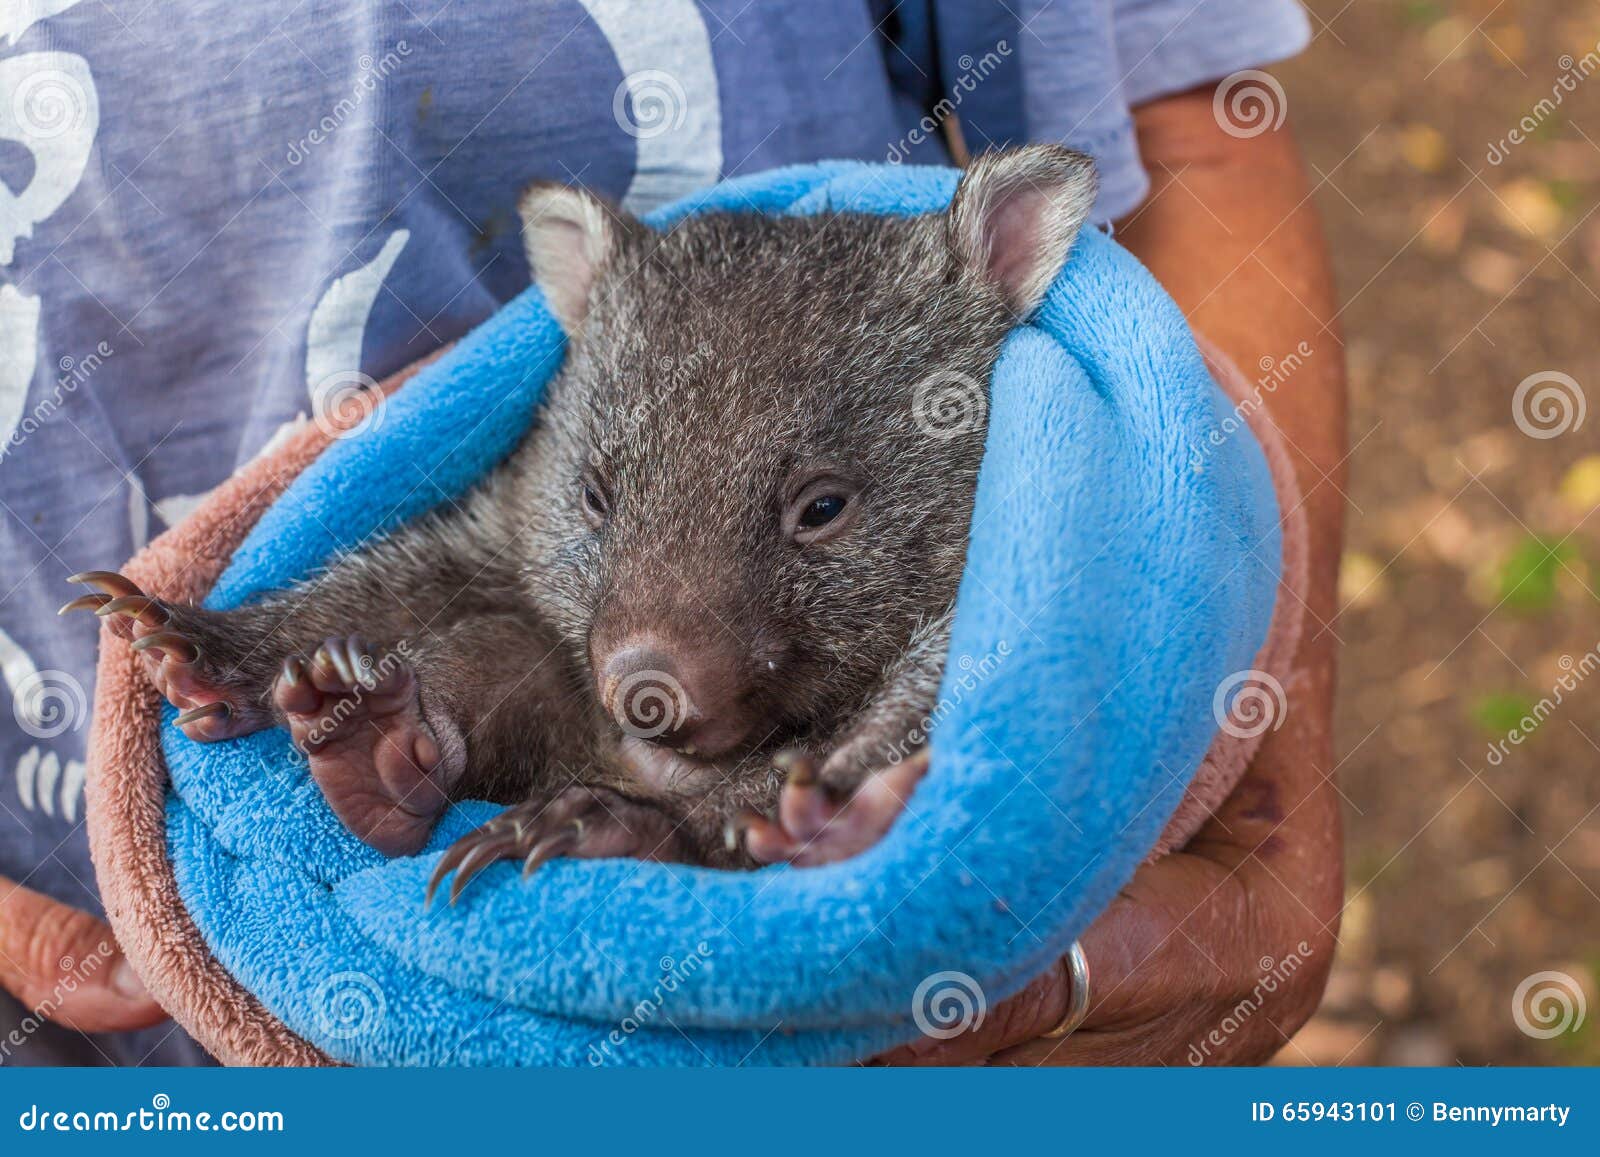 wombat baby stroller